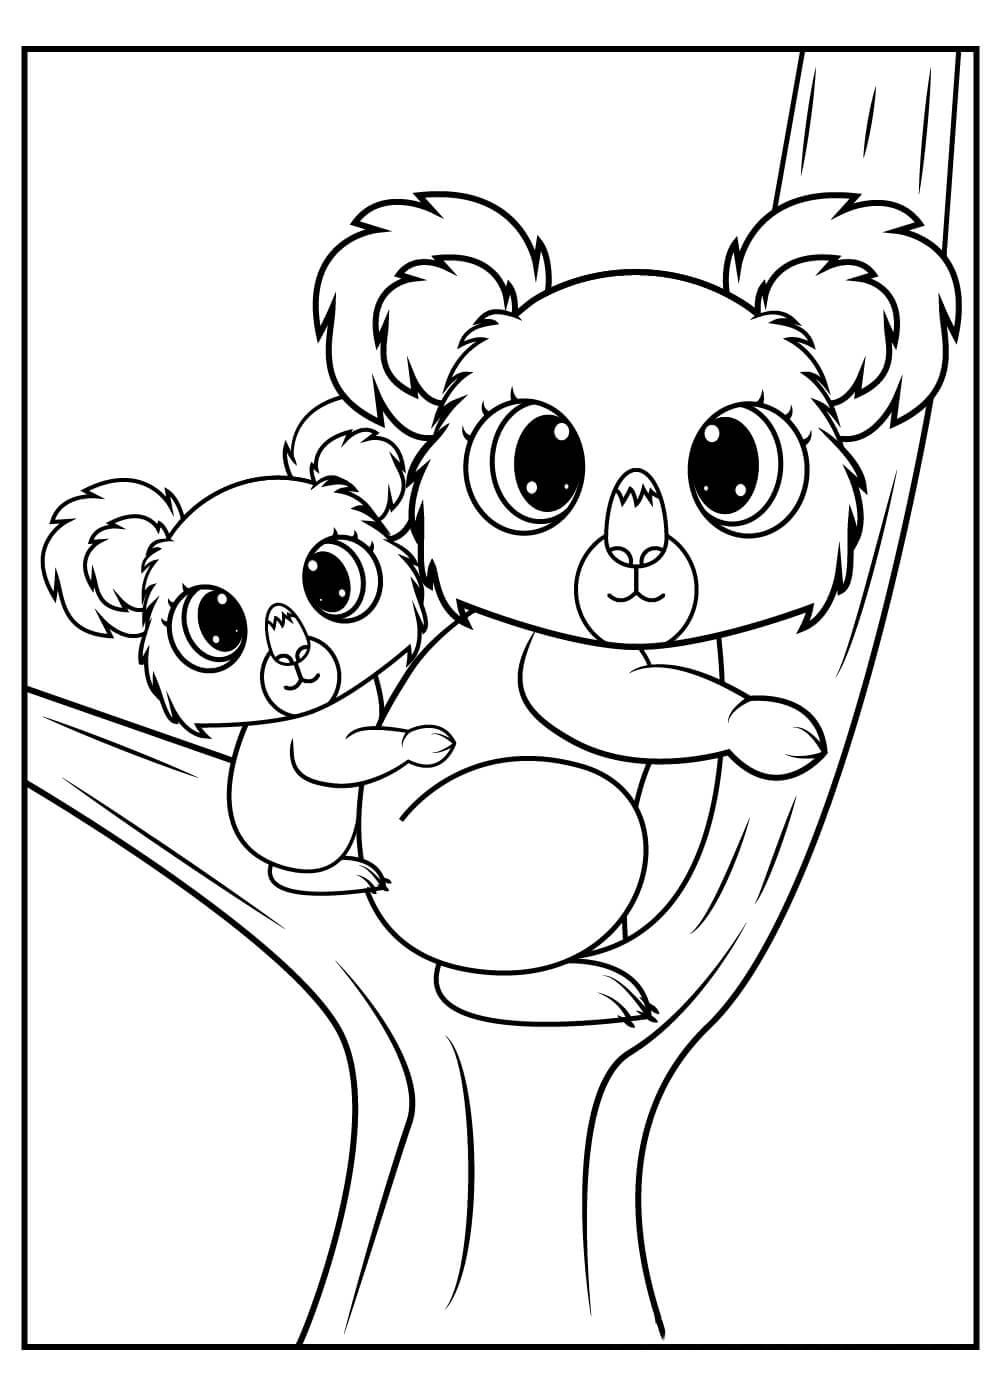 Hermano Koala con bebé Koala